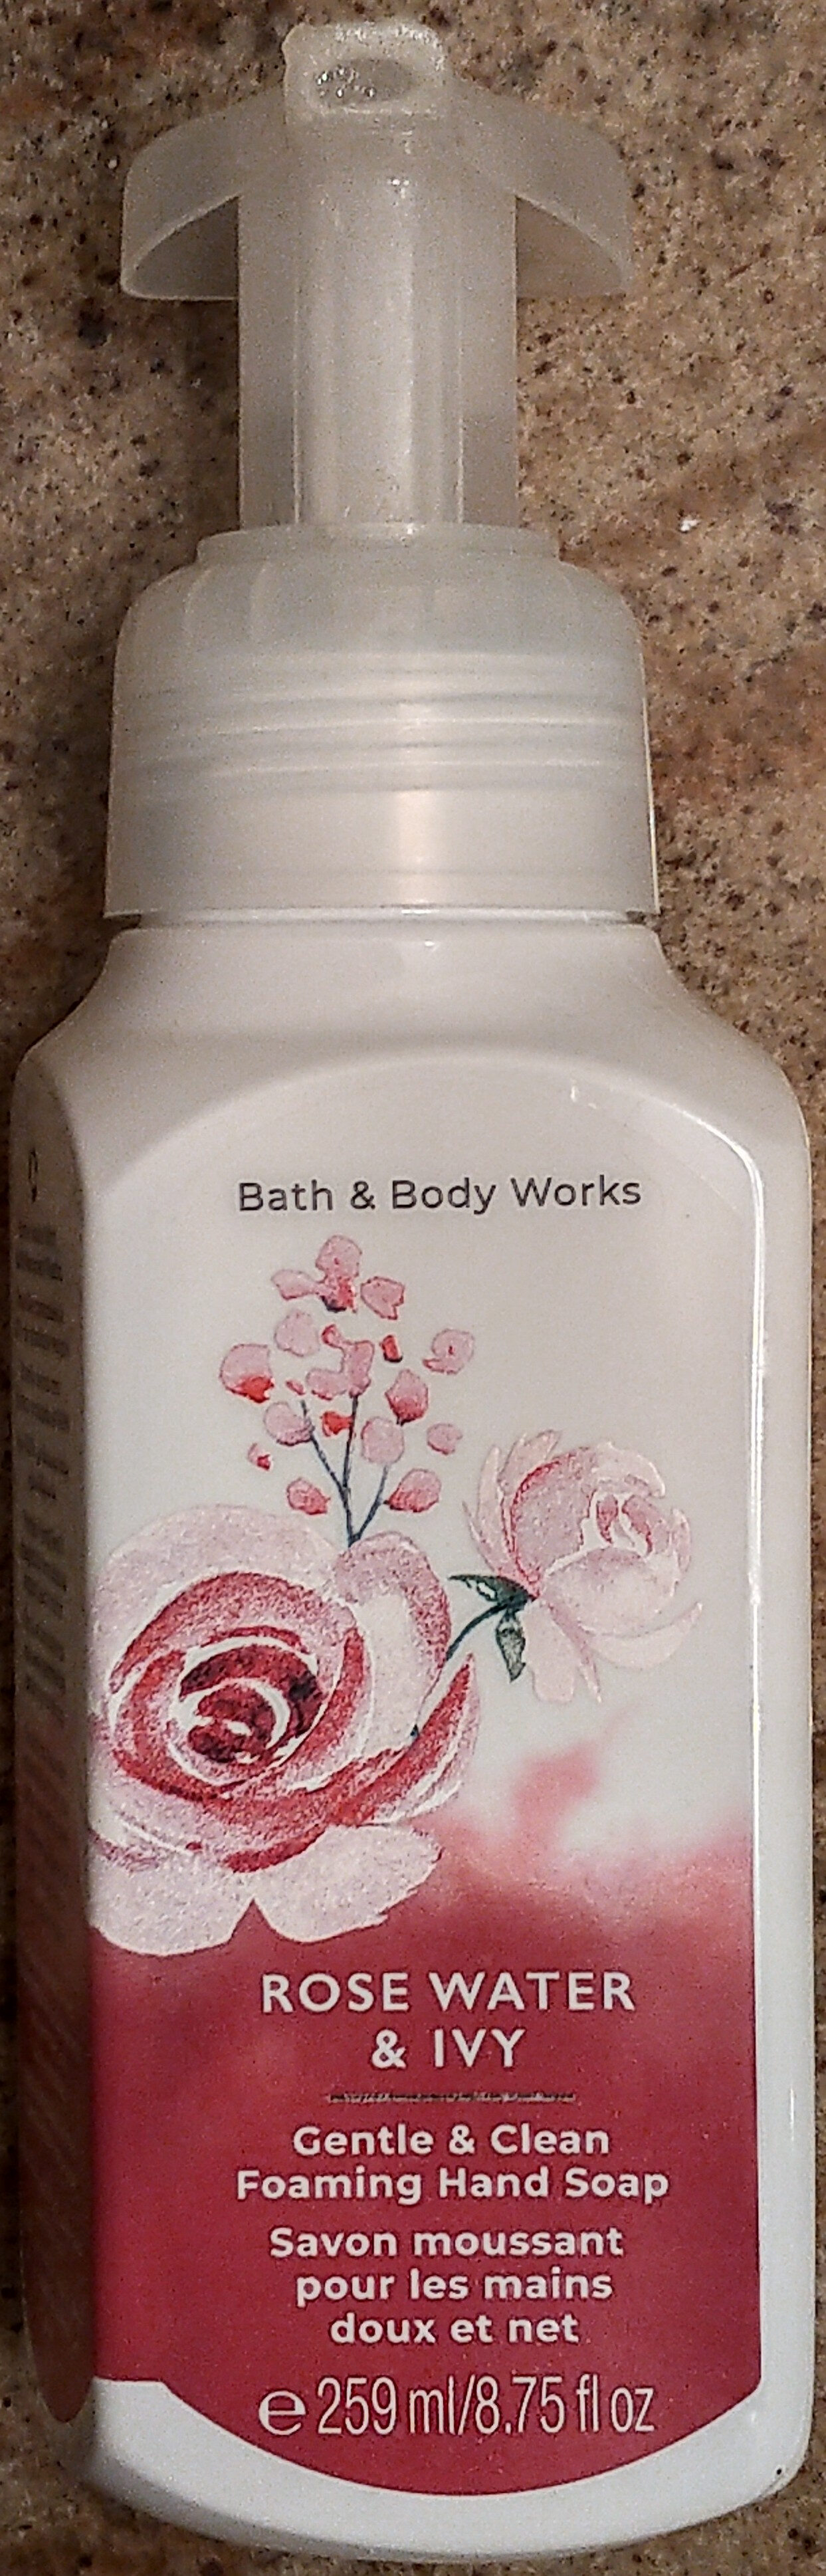 Rose Water & Ivy Gentle & Clean Foaming Hand Soap - Product - en